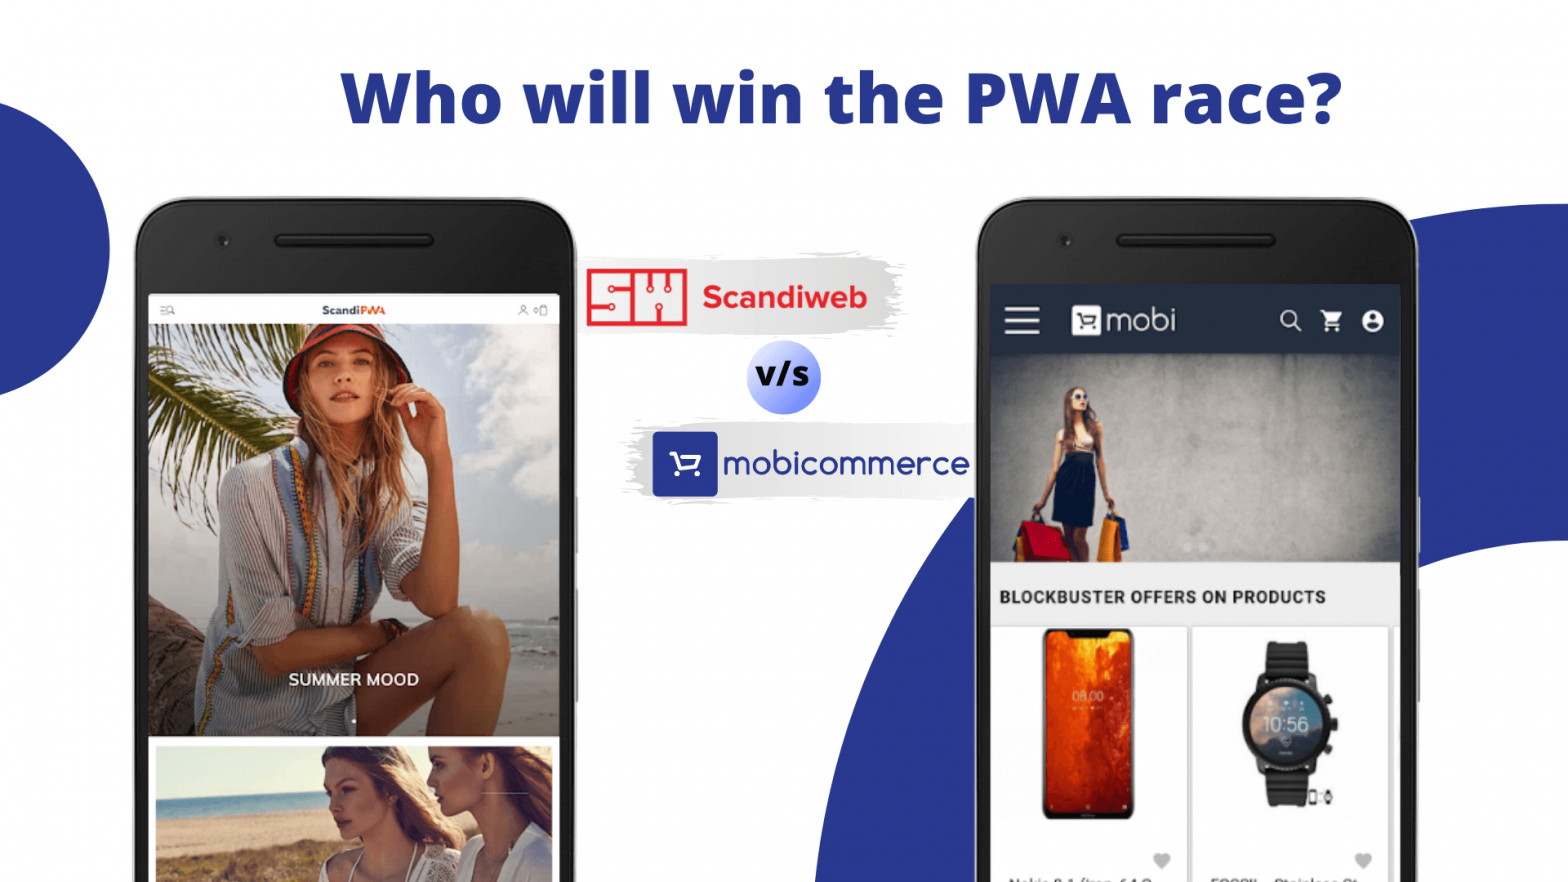 Scandiweb Vs MobiCommerce PWA